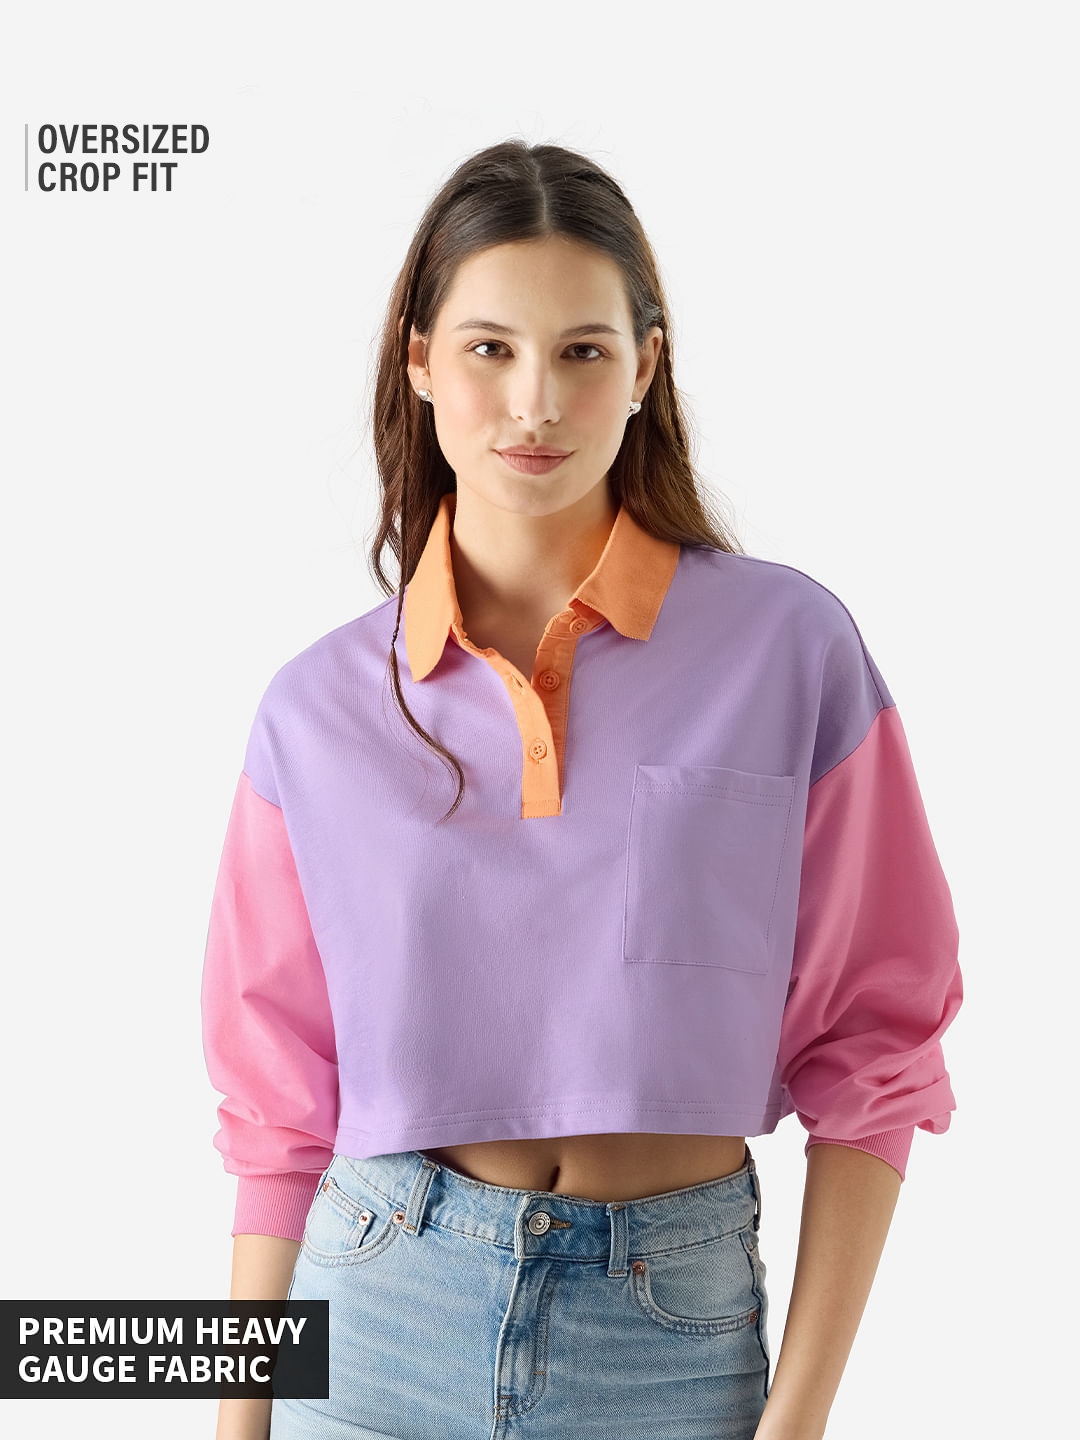 Women's Solids: Lavender & Pink Colourblock Women's Full Sleeves Tops